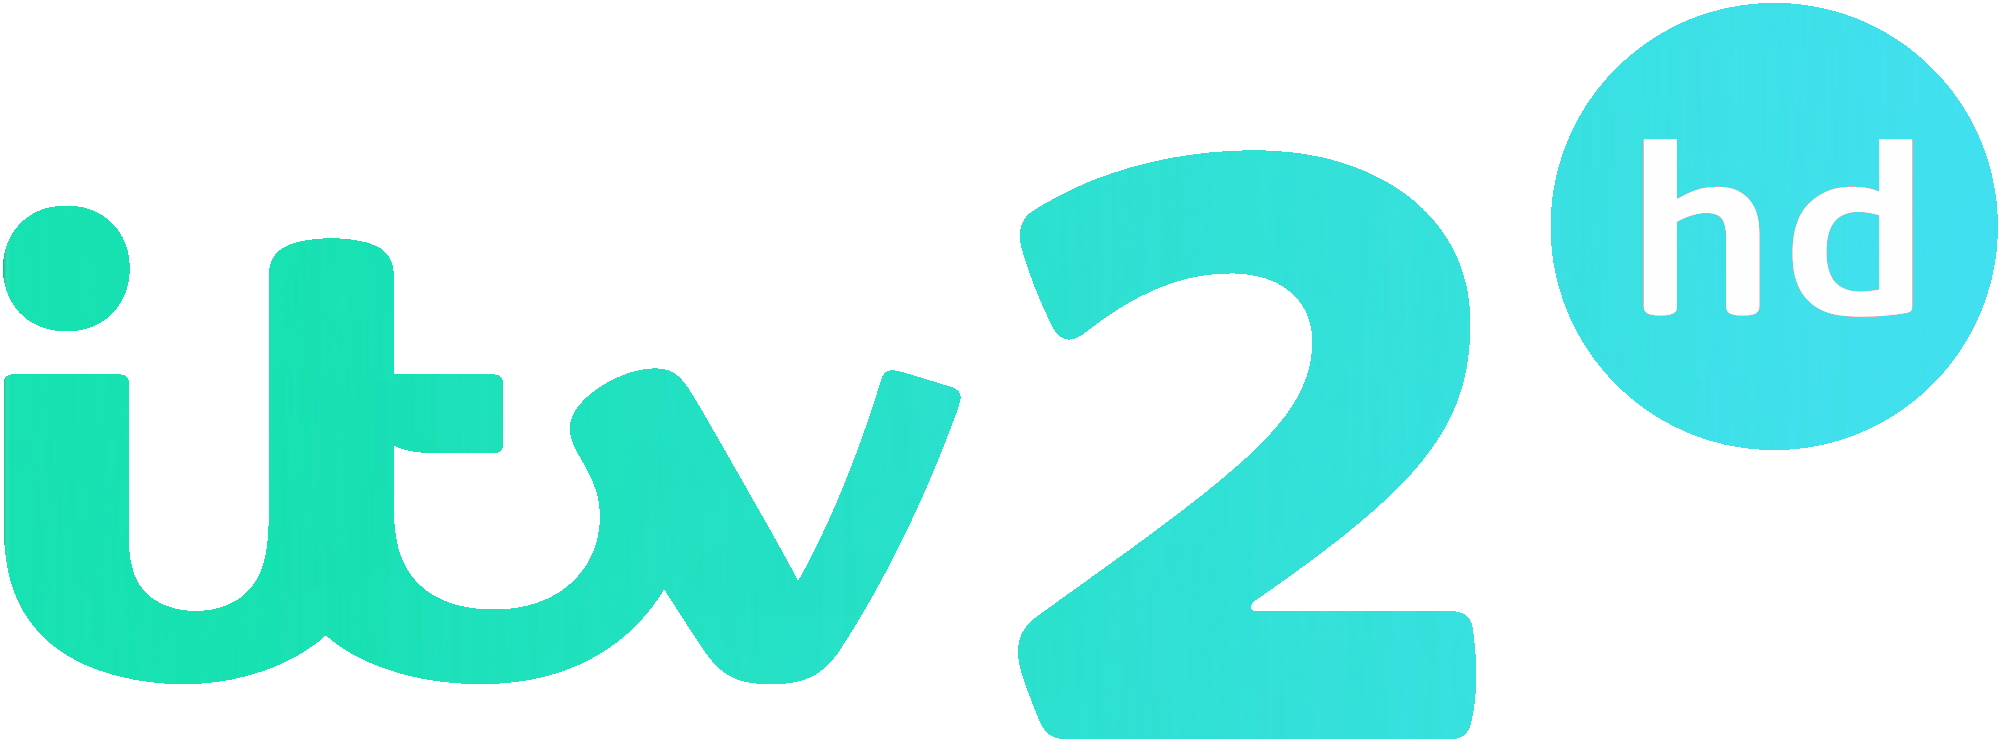 ITV1 HD logo.png